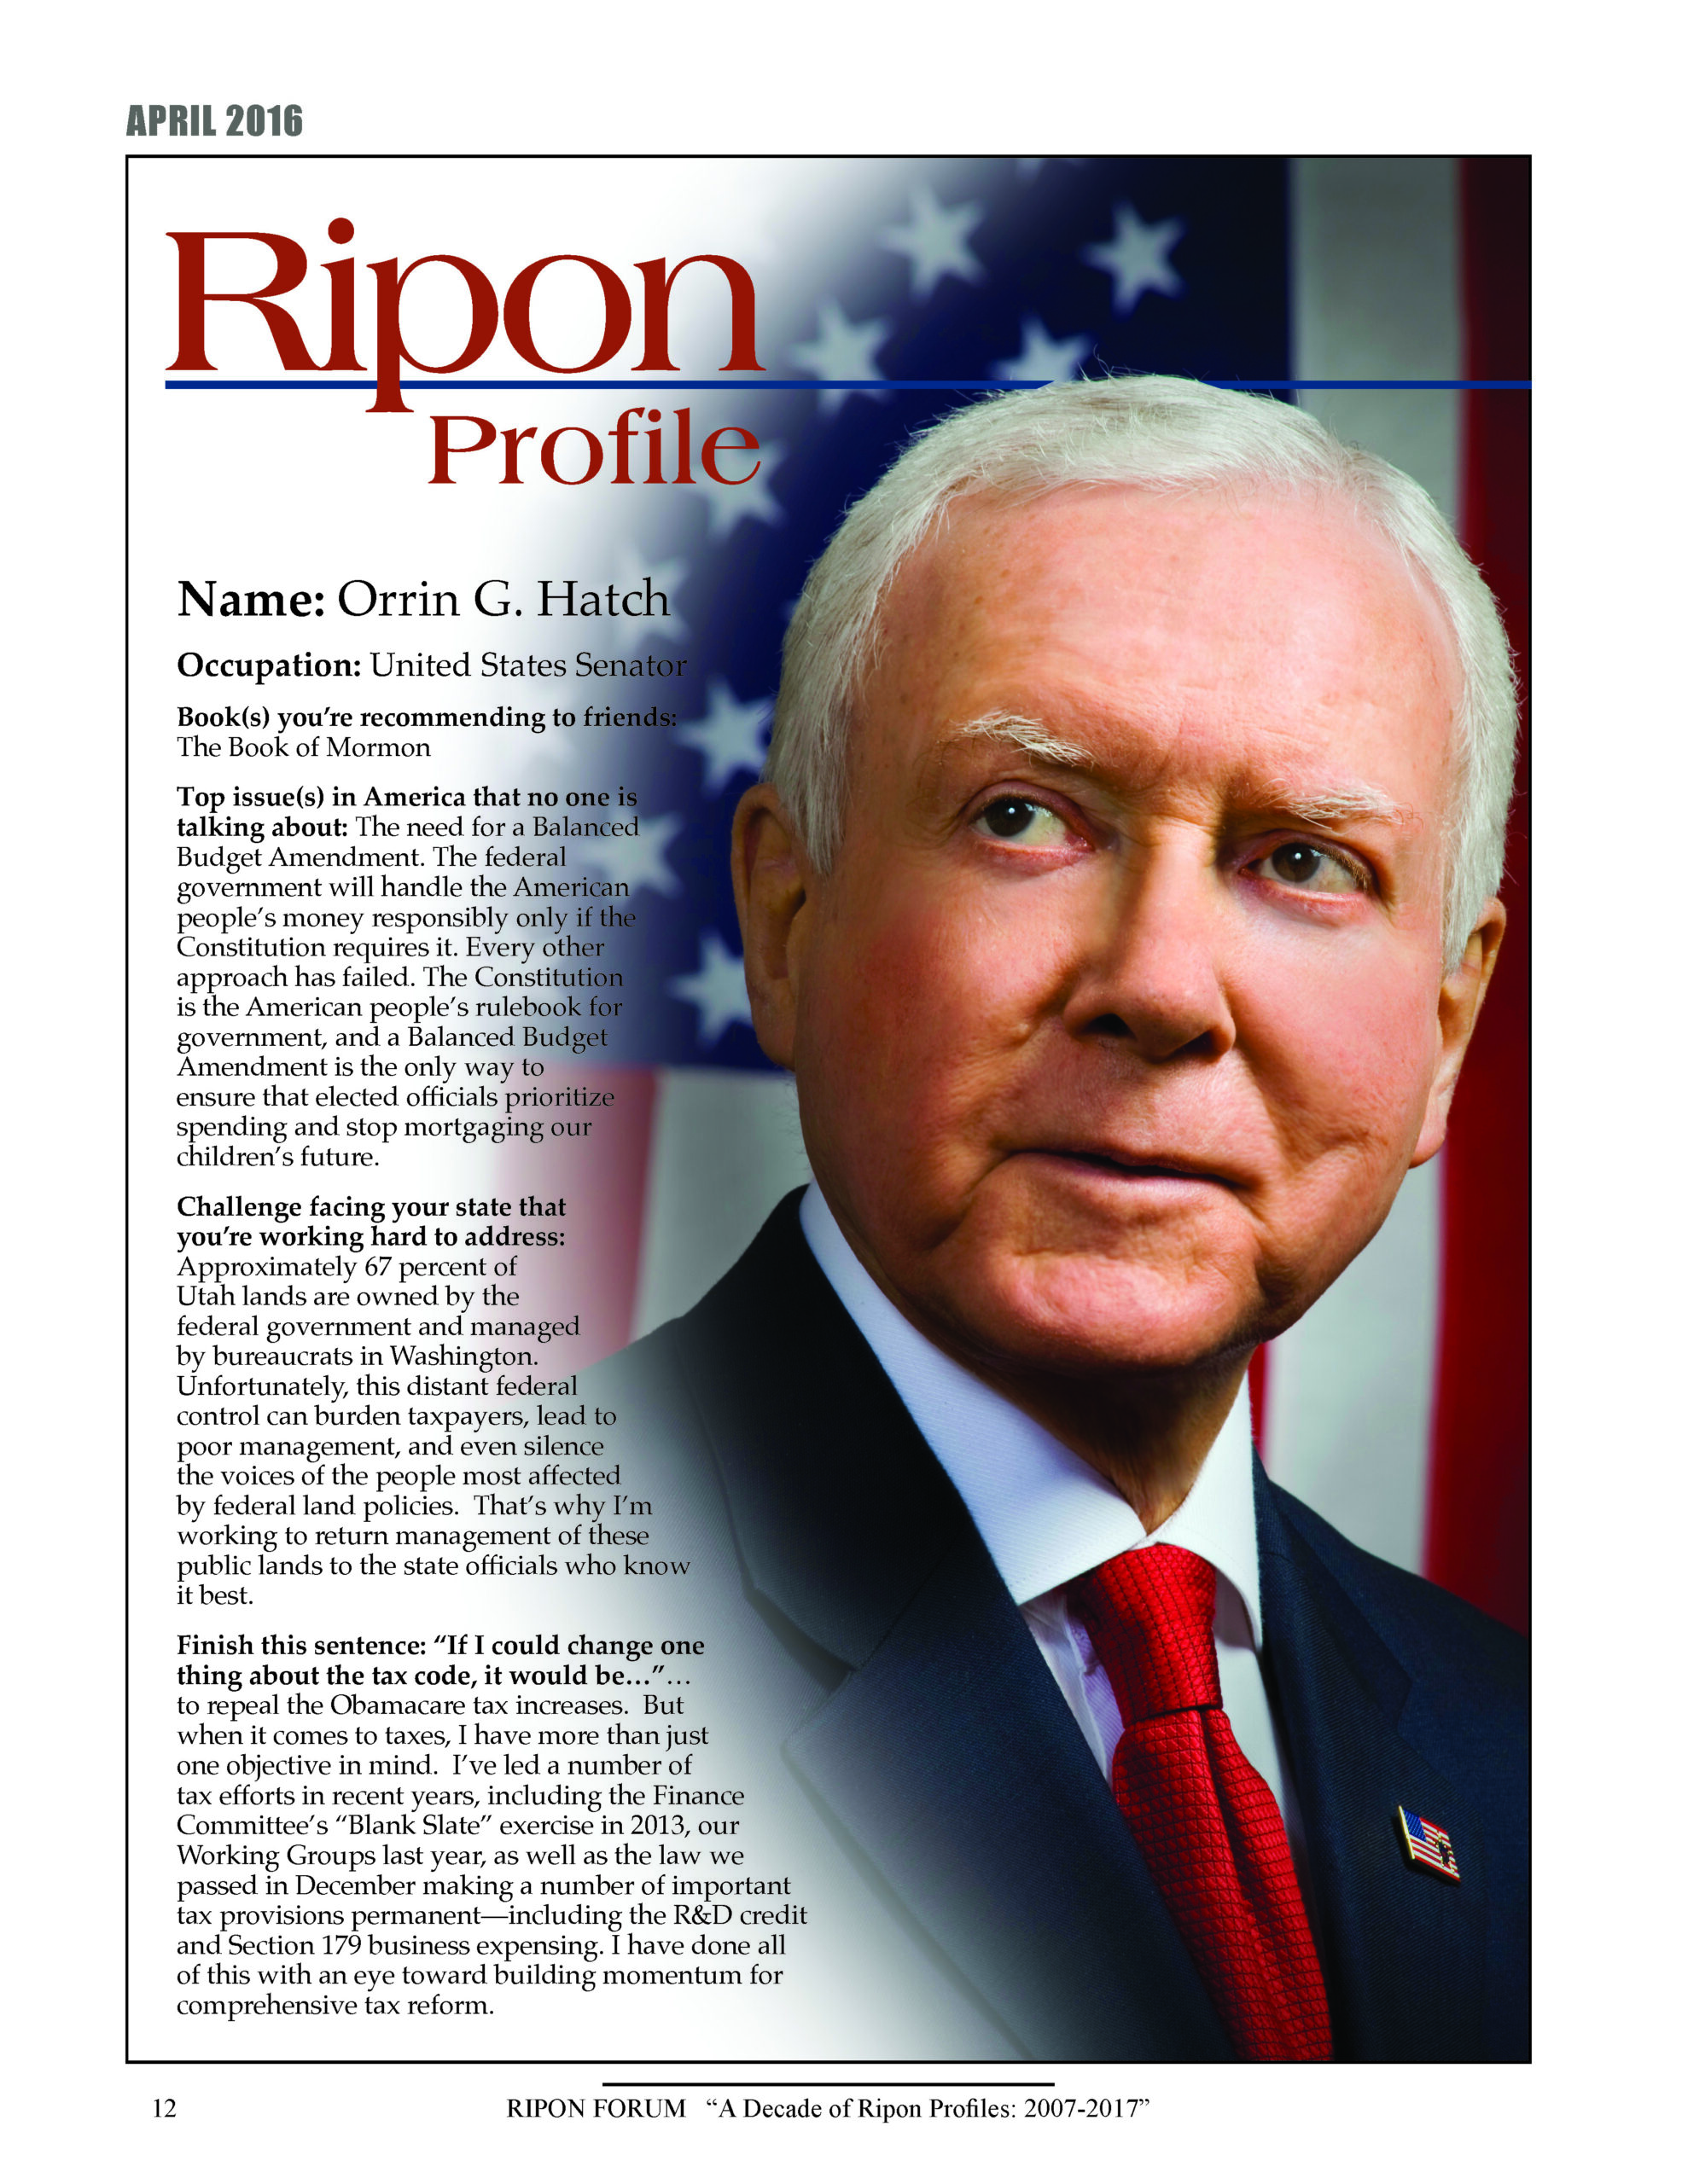 Ripon Profile of Orrin G. Hatch